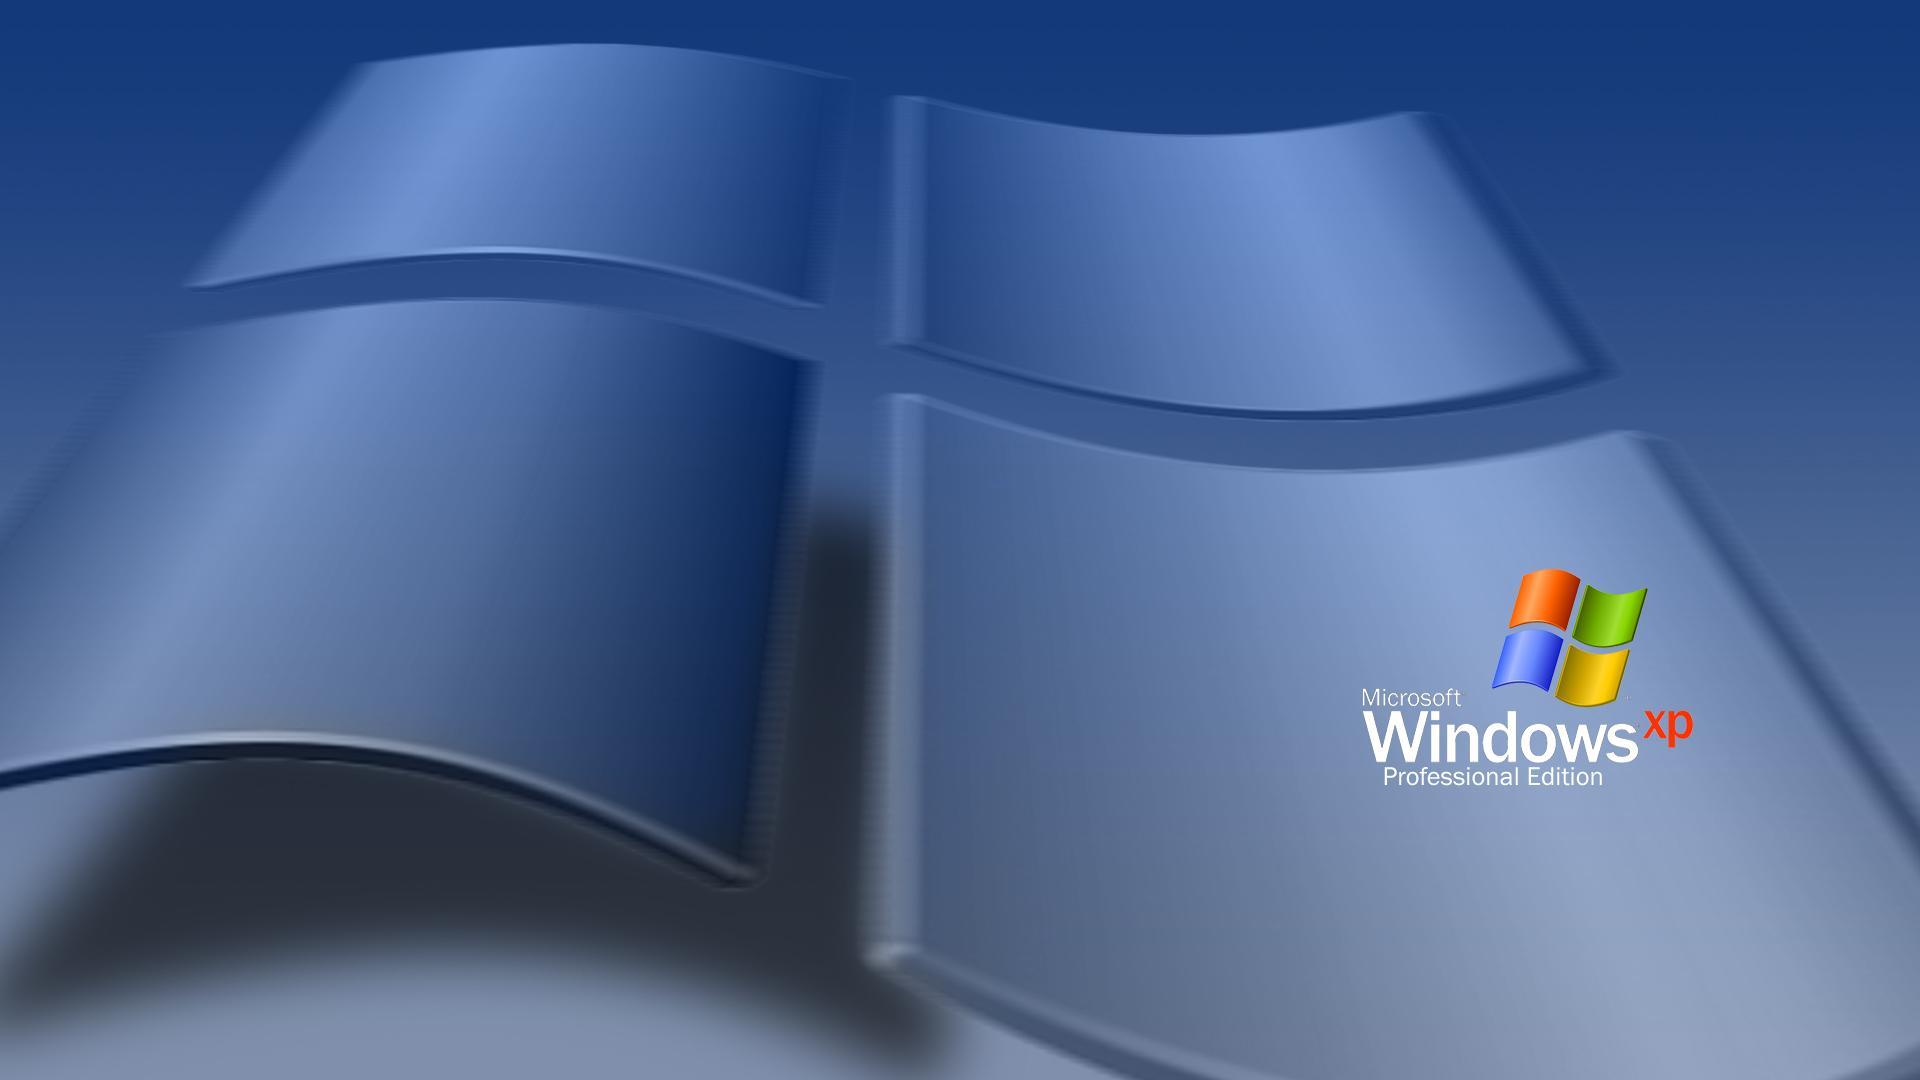 Microsoft Windows Xp Professional Wallpapers Top Free Microsoft Windows Xp Professional Backgrounds Wallpaperaccess